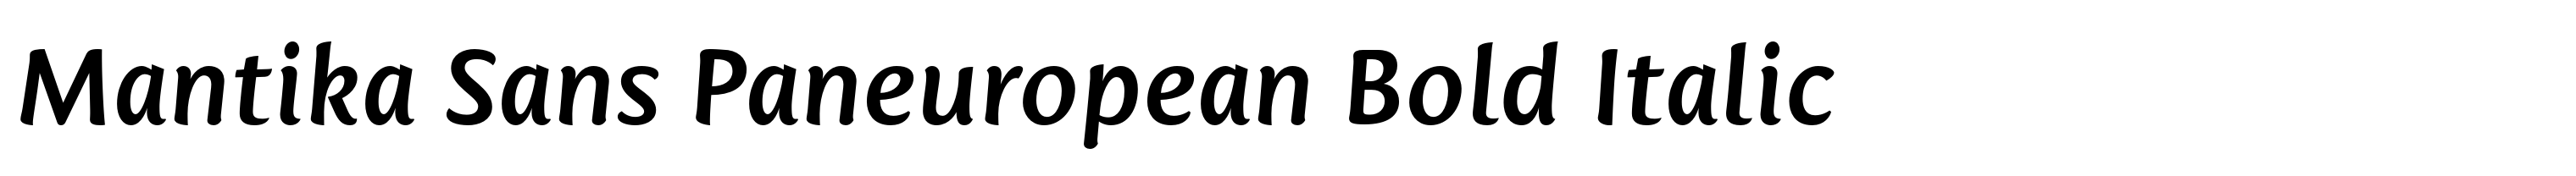 Mantika Sans Paneuropean Bold Italic